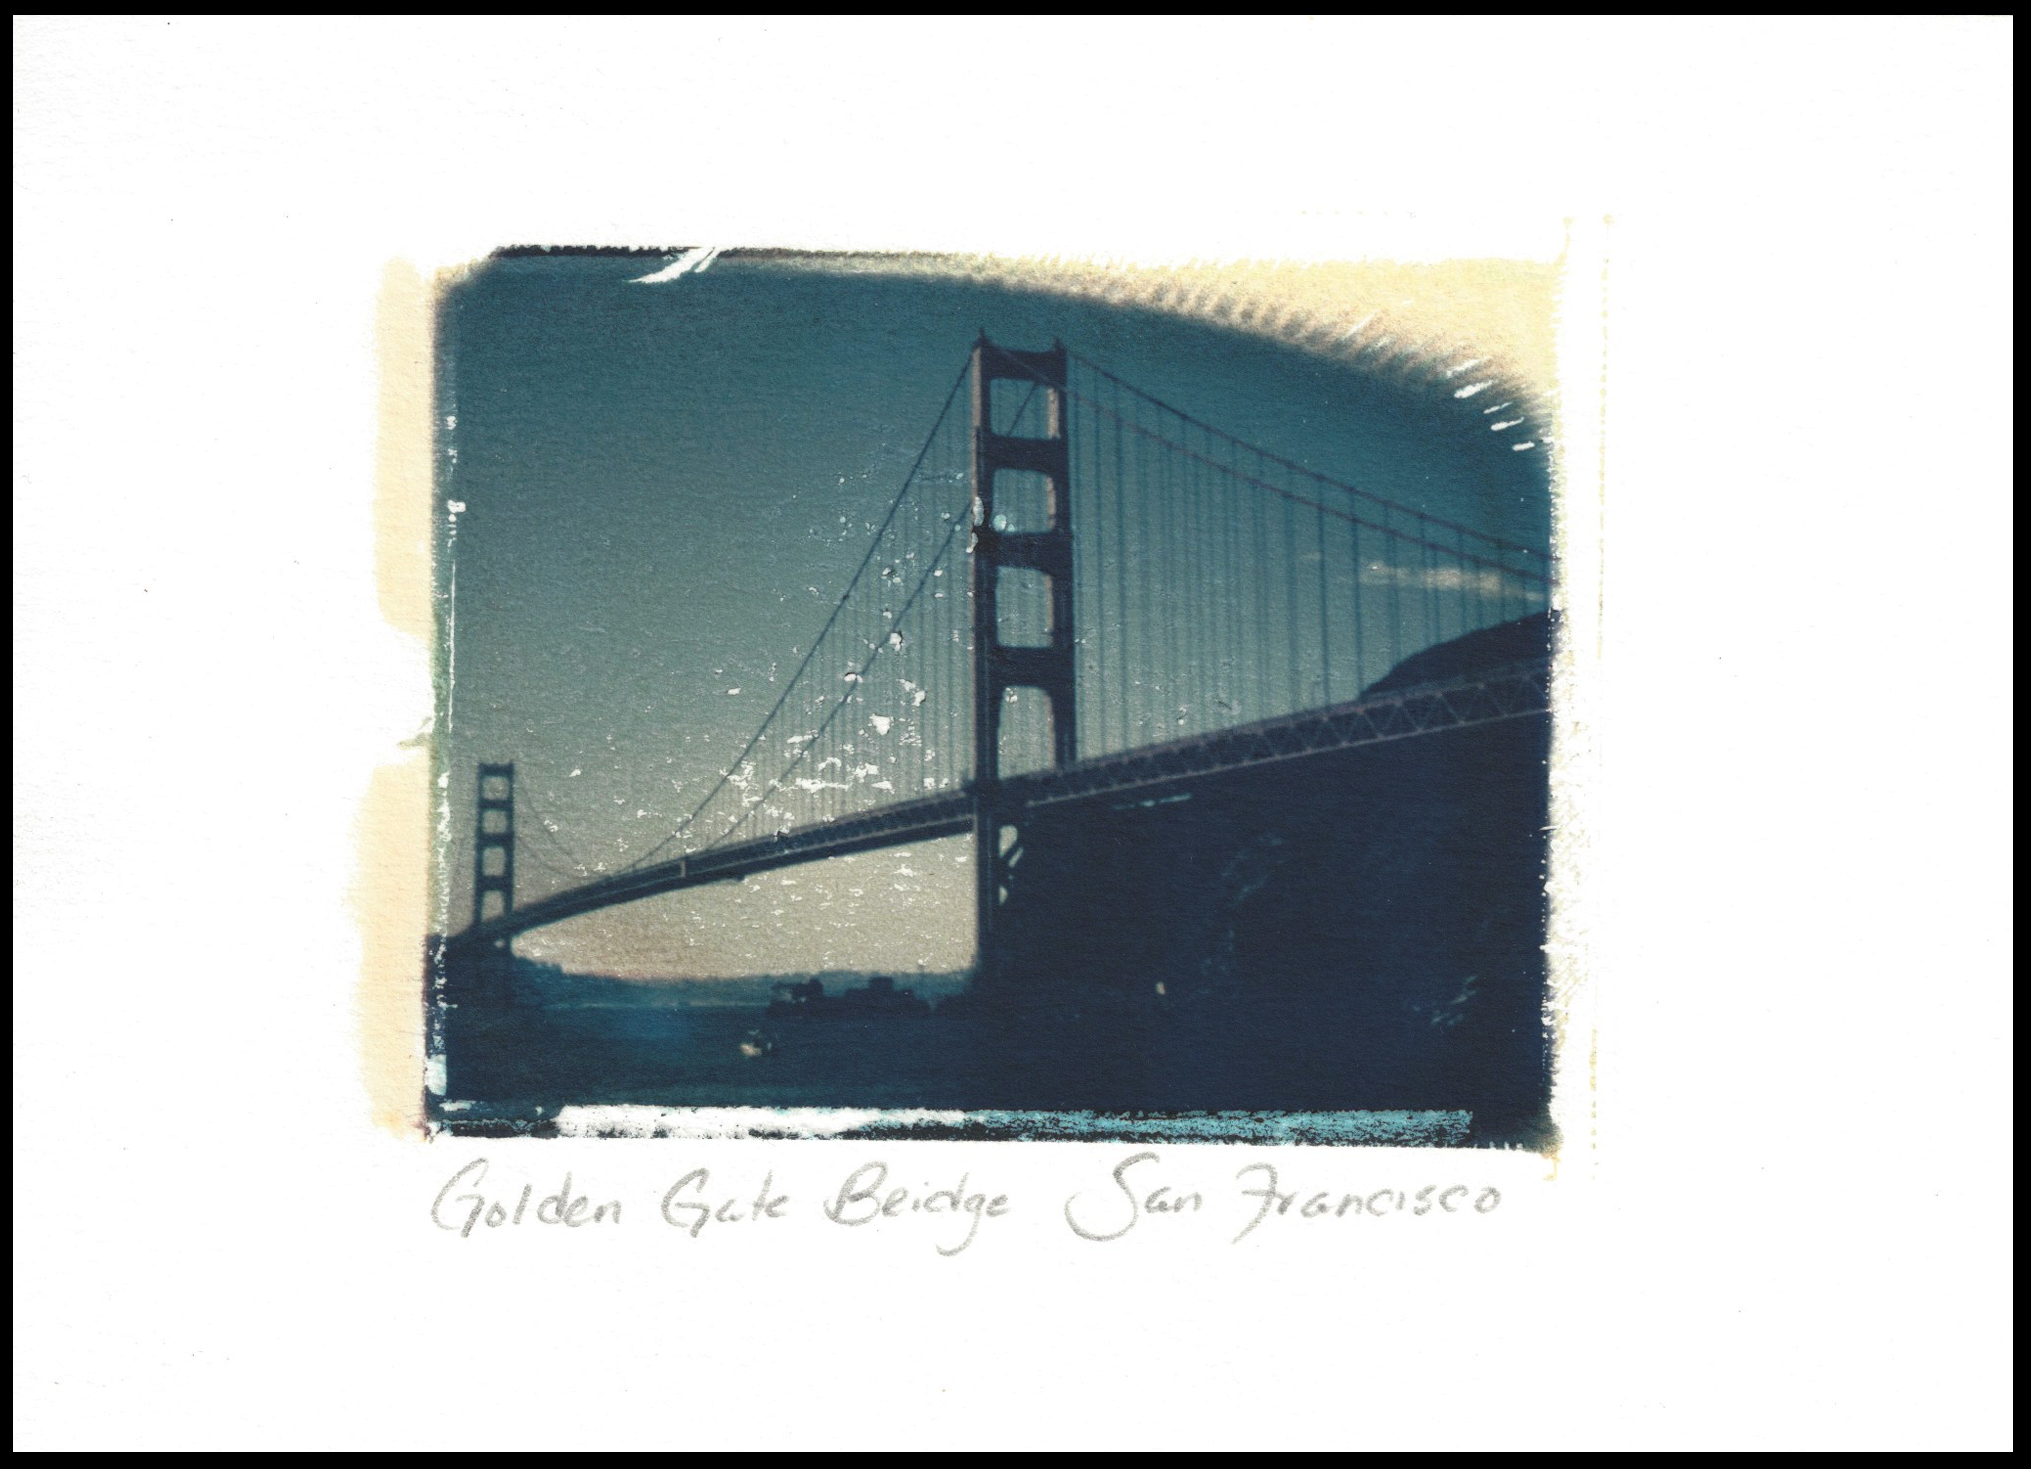 San Francisco, Golden Gate Bridge, Polaroid Transfer